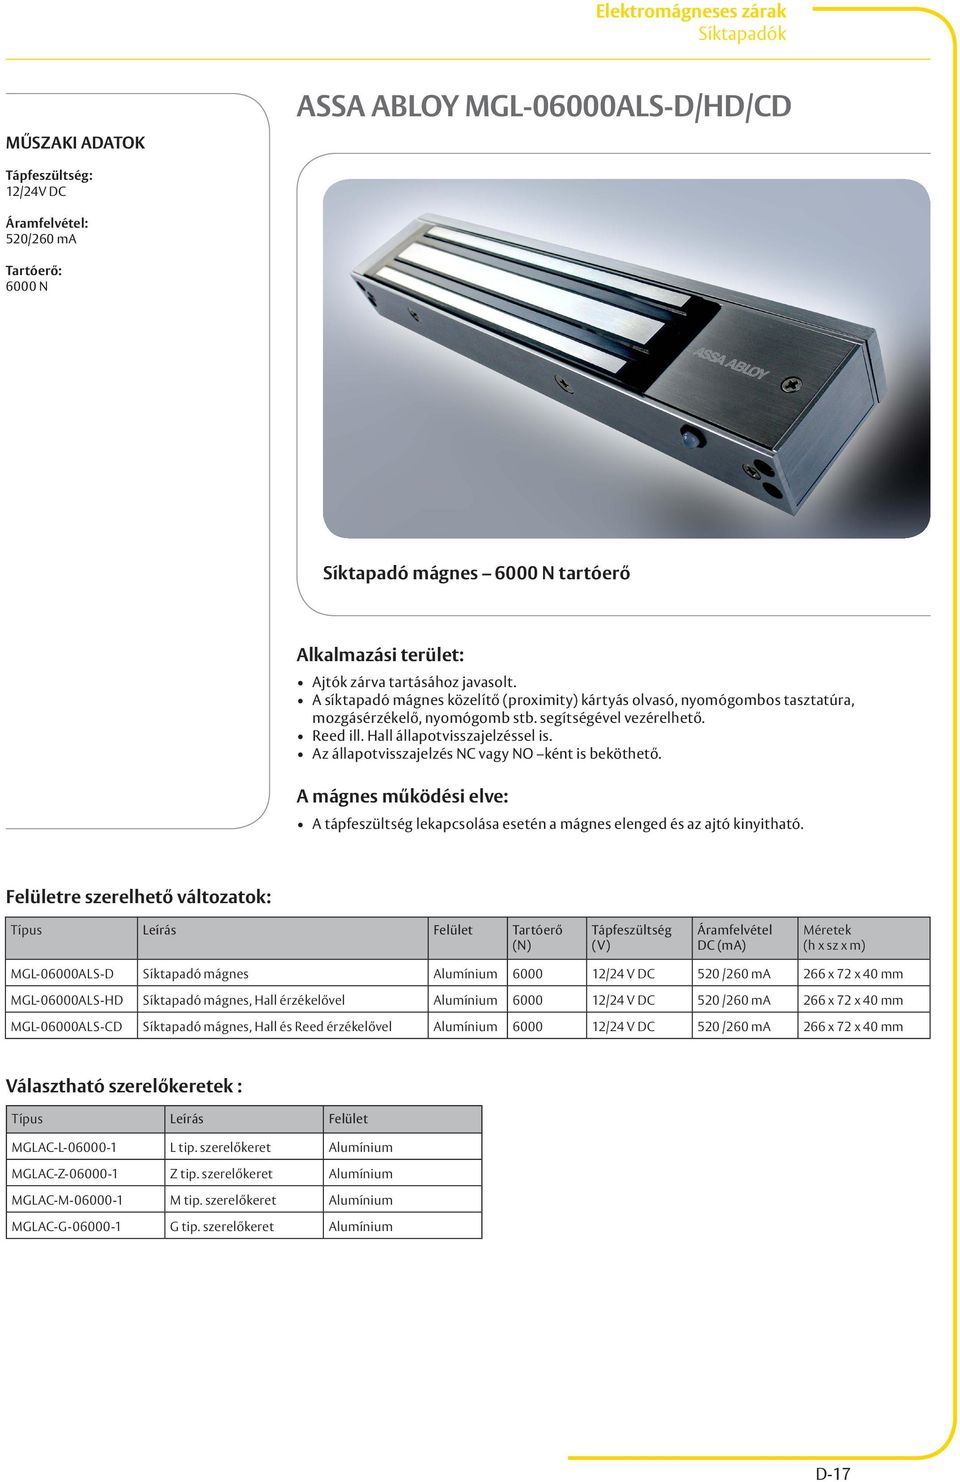 MGL-06000ALS-CD Síktapadó mágnes, Hall és Reed érzékelővel Alumínium 6000 12/24 V DC 520 /260 ma 266 x 72 x 40 mm MGLAC-L-06000-1 L tip.